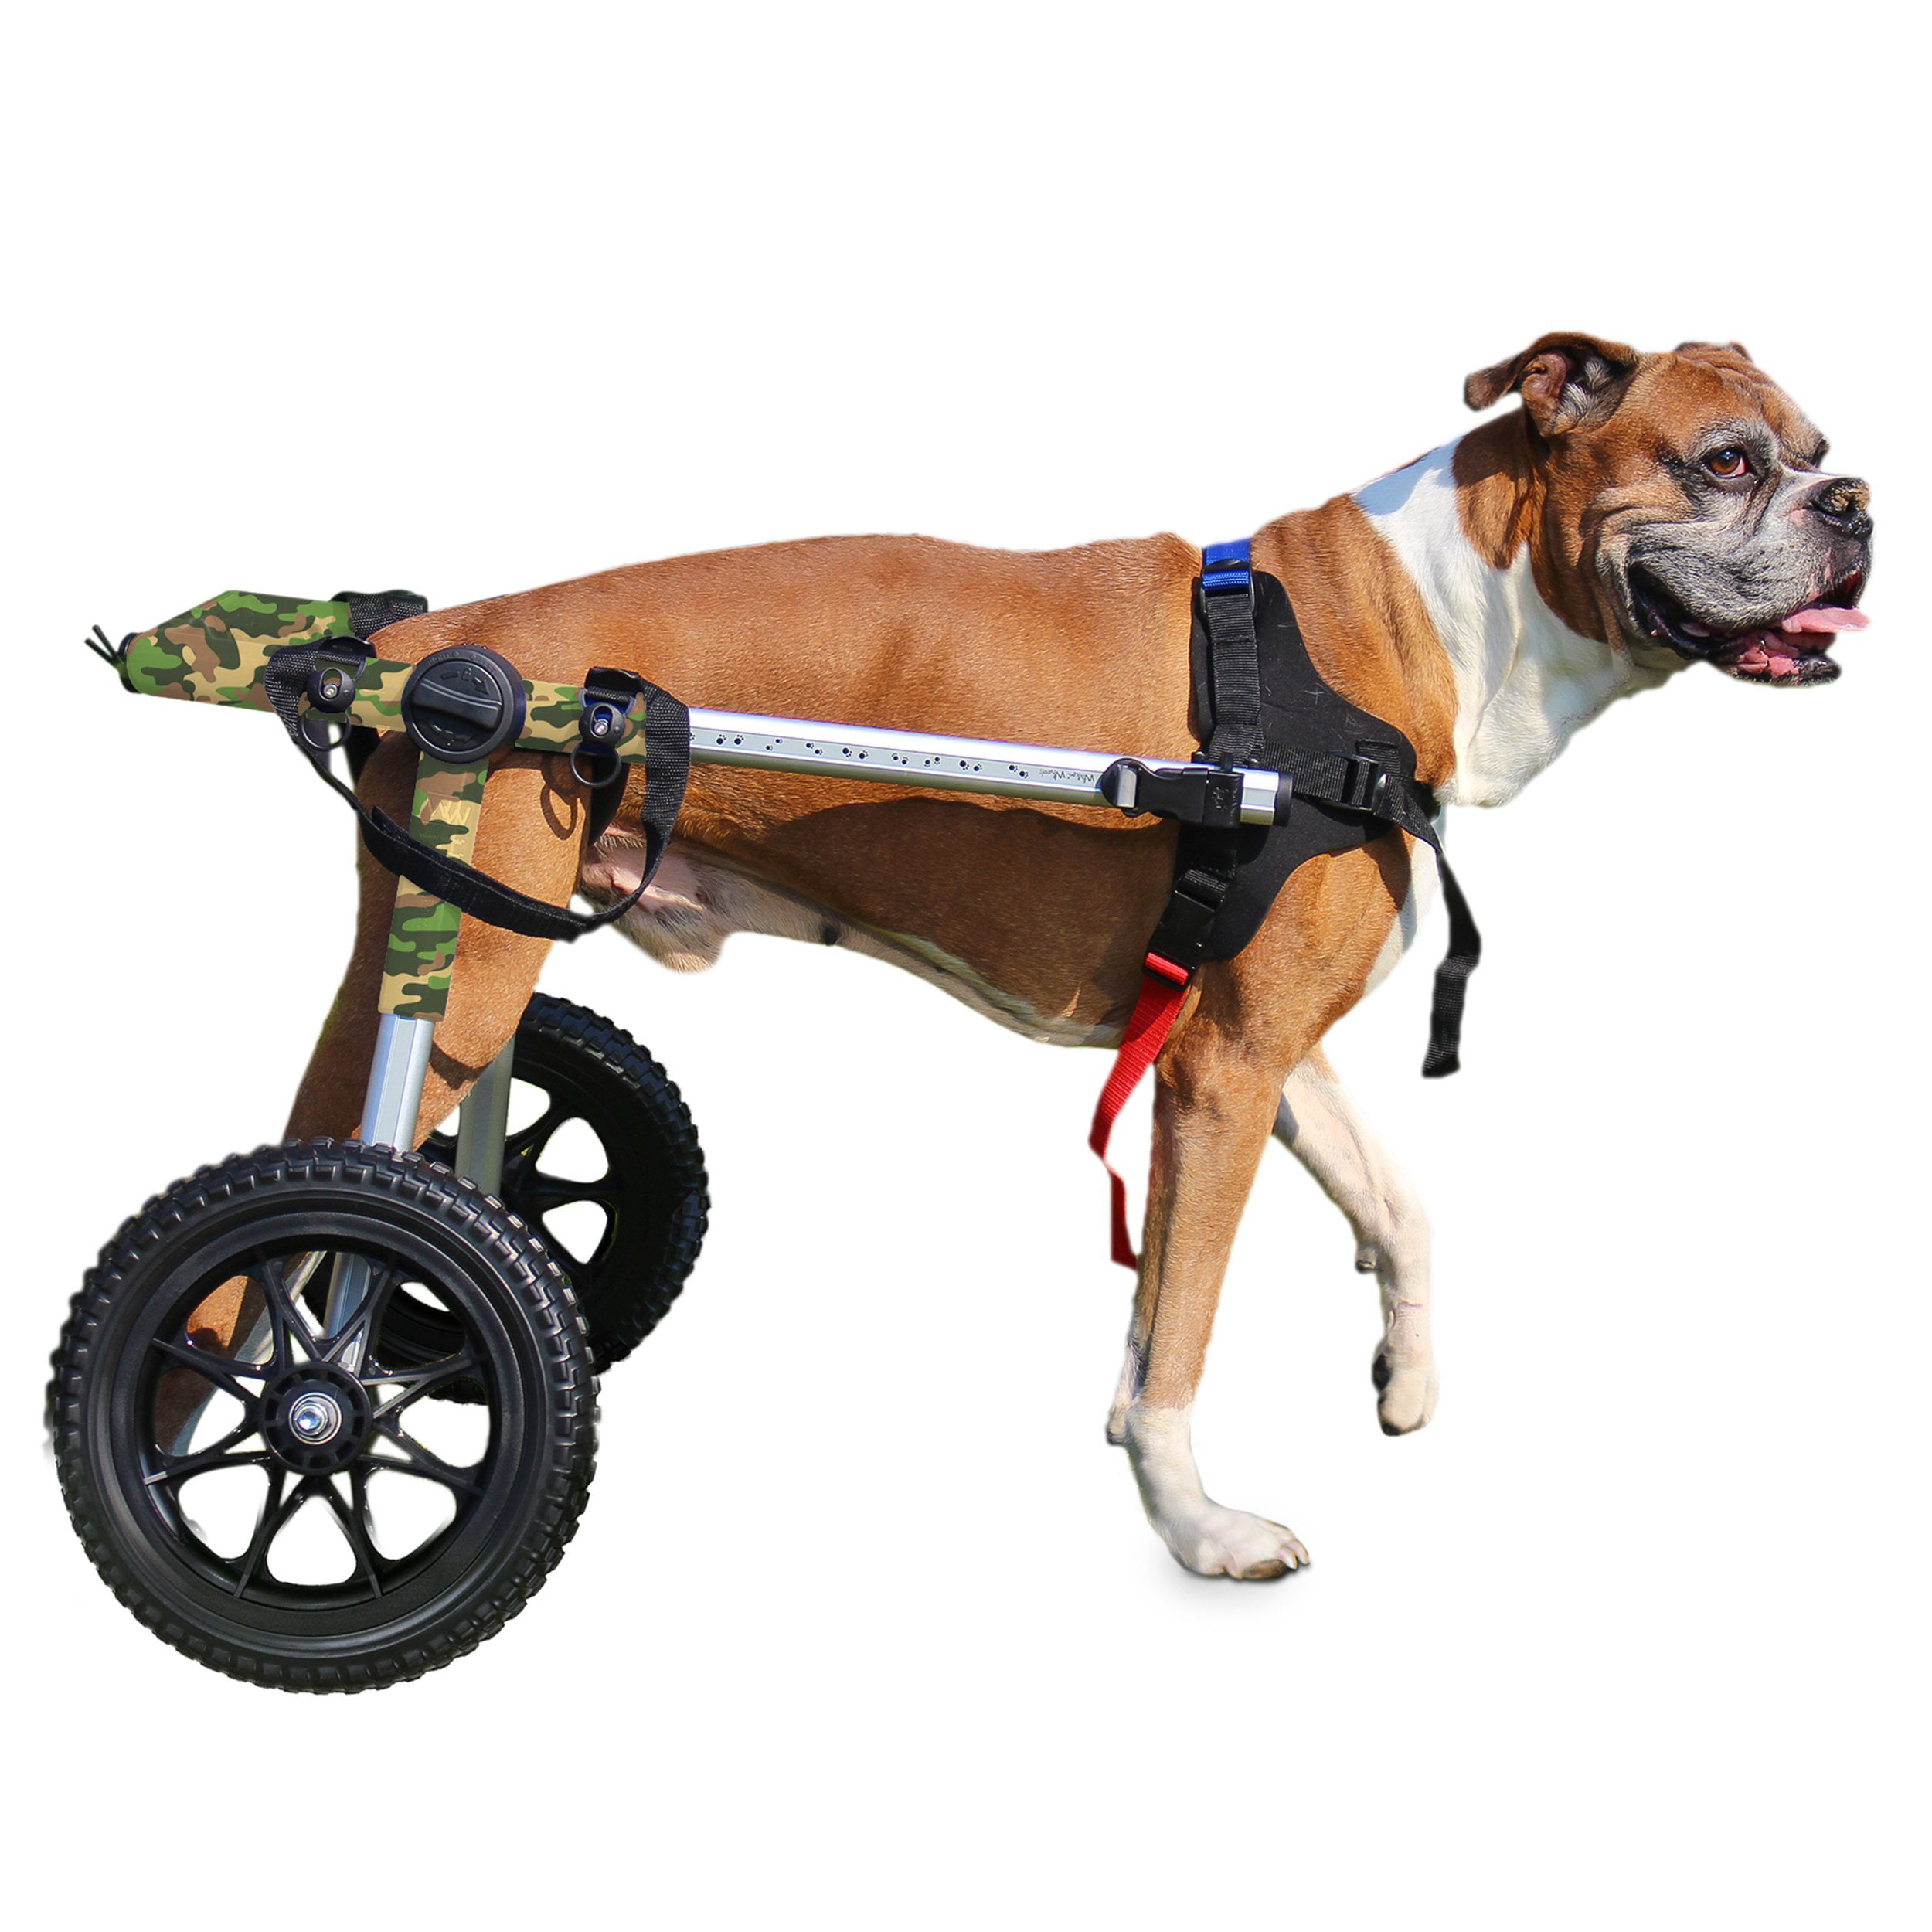 Инвалидная коляска для собак Walkin Wheels. Кресло для собаки.